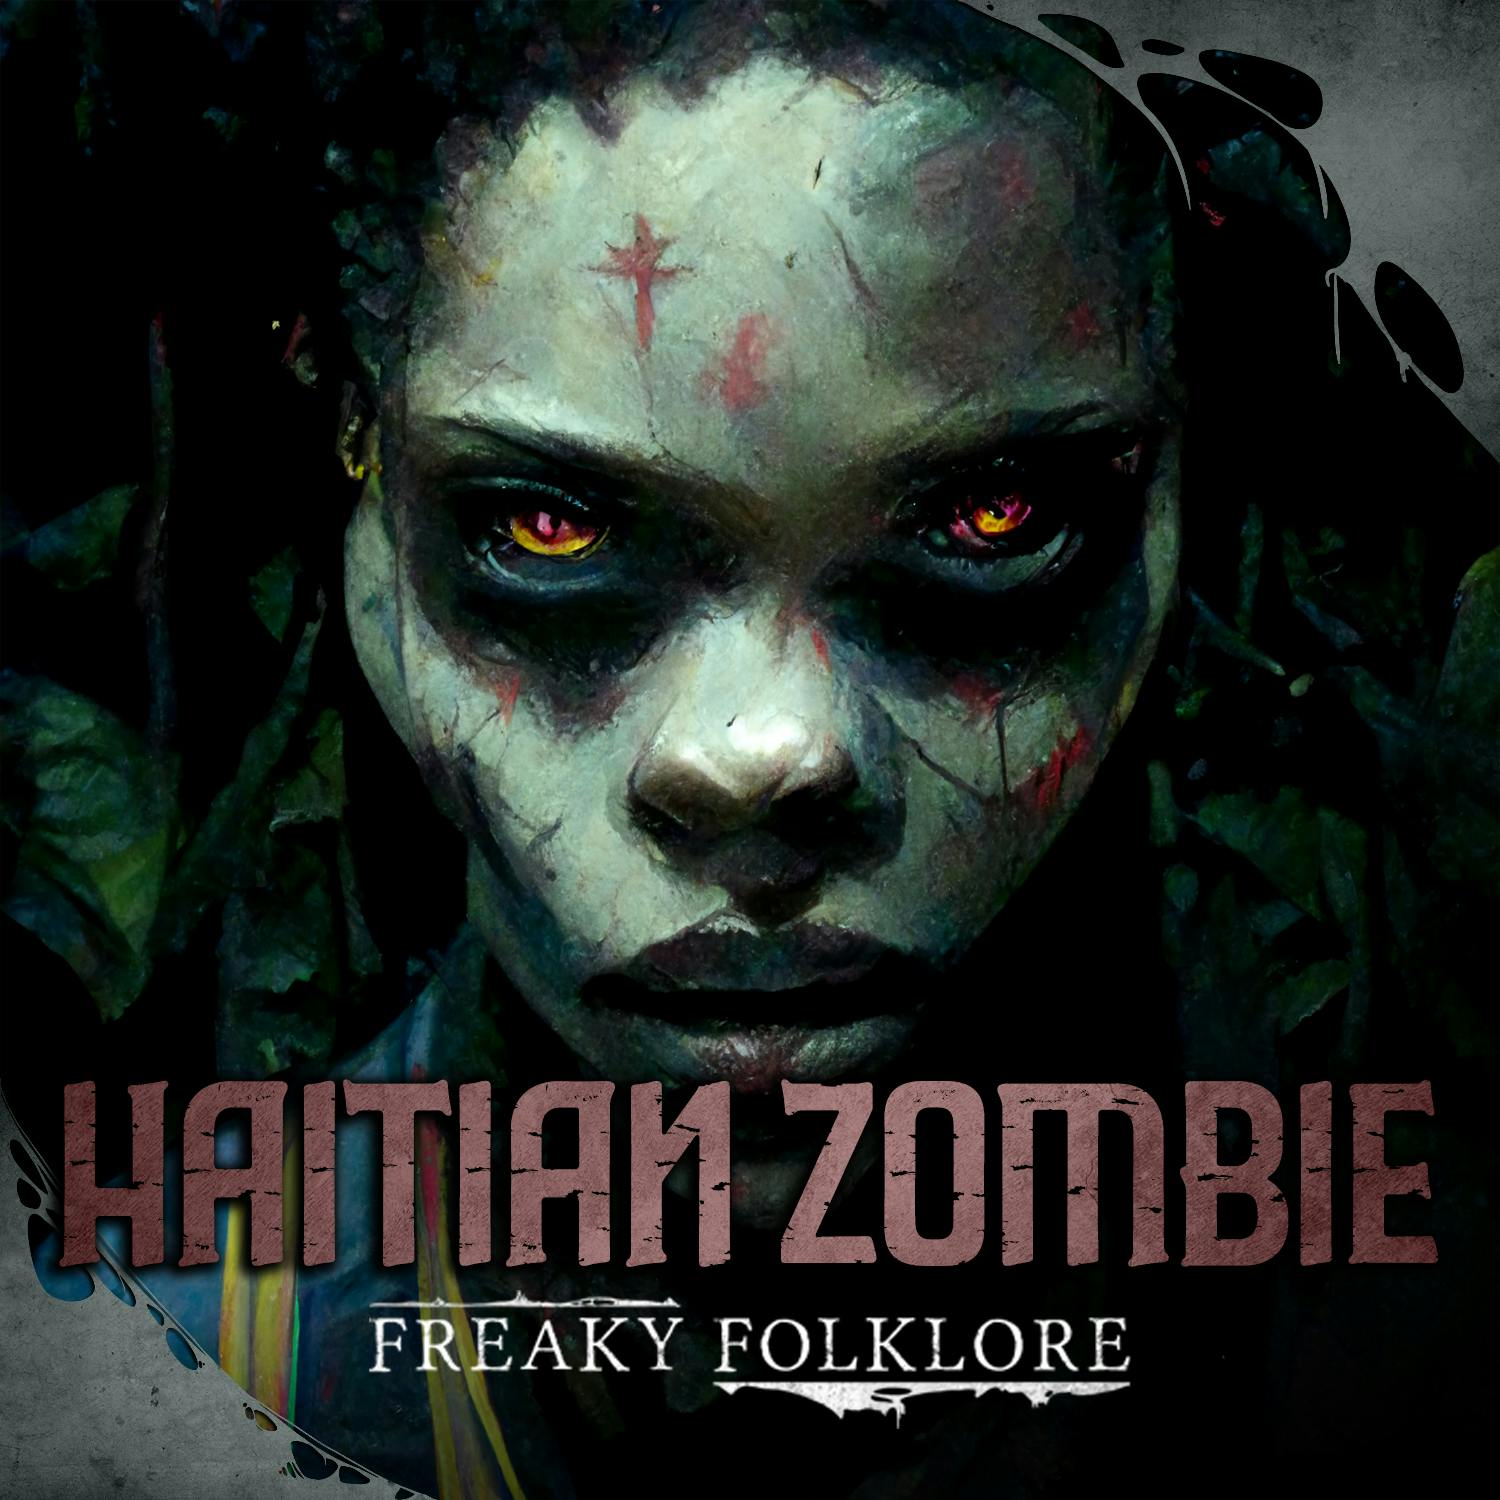 The Haitian Zombie - An Imprisoned Soul